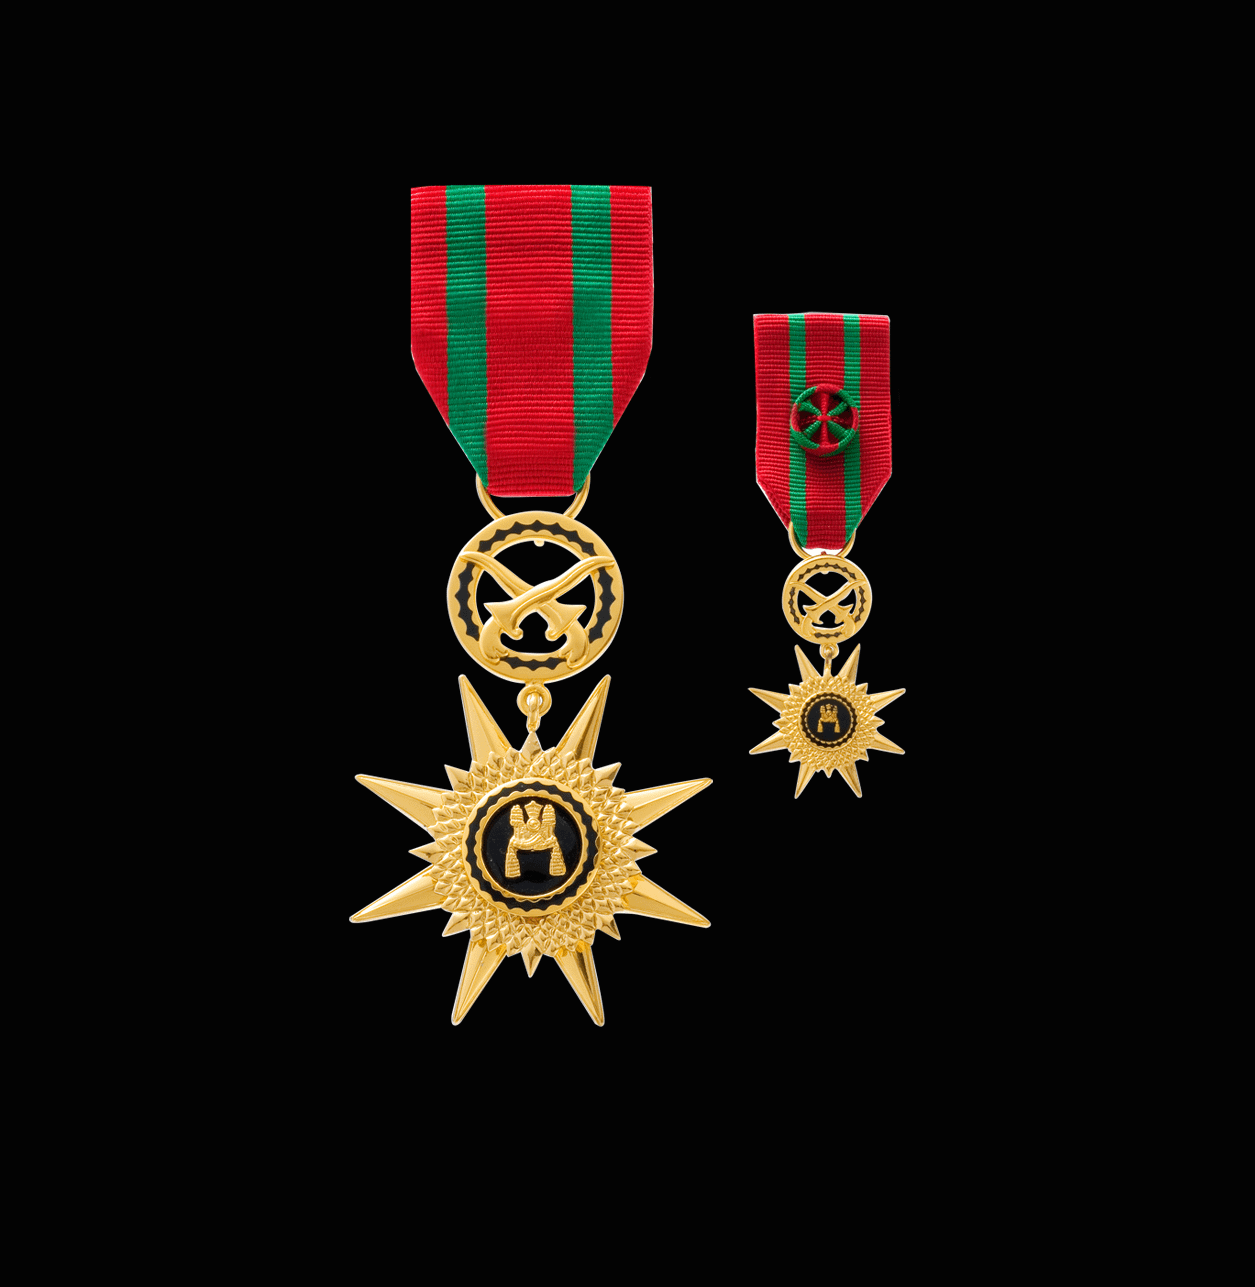 The Most Gallant Order of Pahlawan Negara Brunei